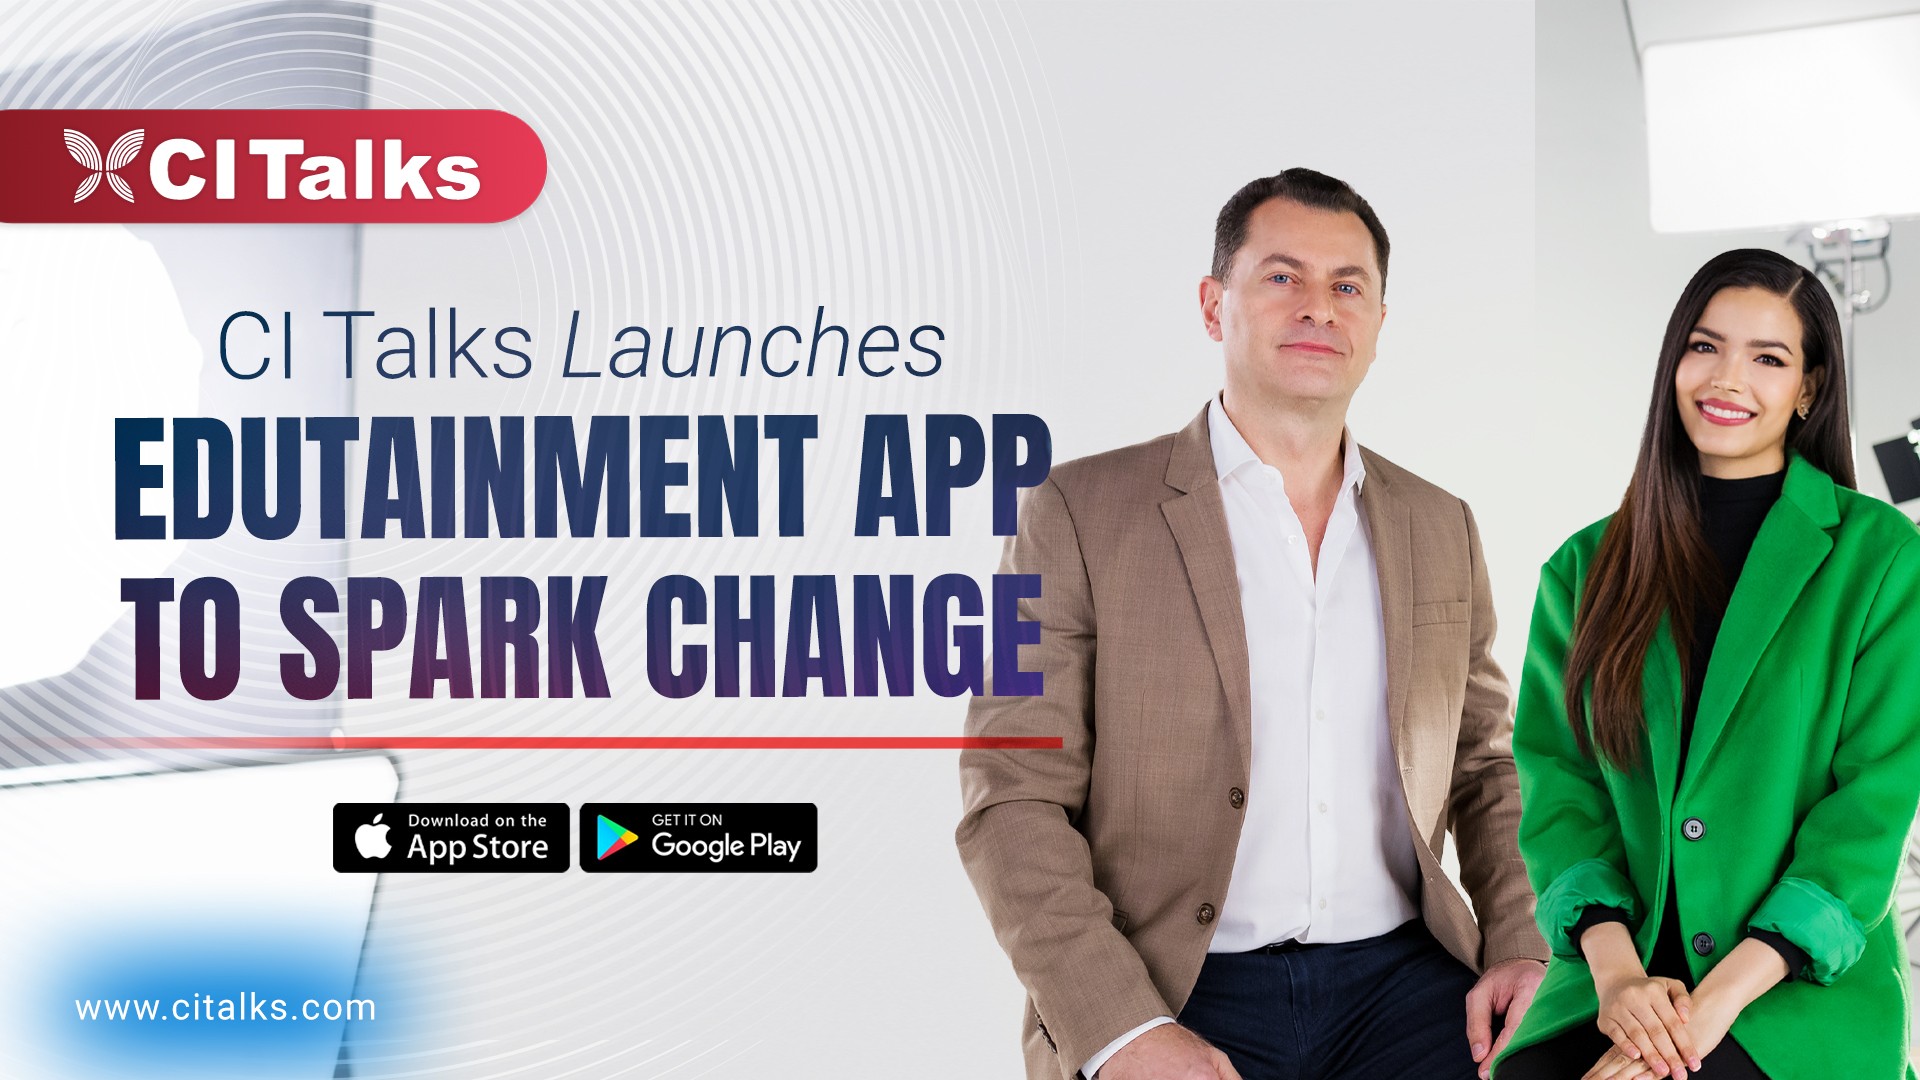 CI Talks Launches Edutainment App to Spark Change